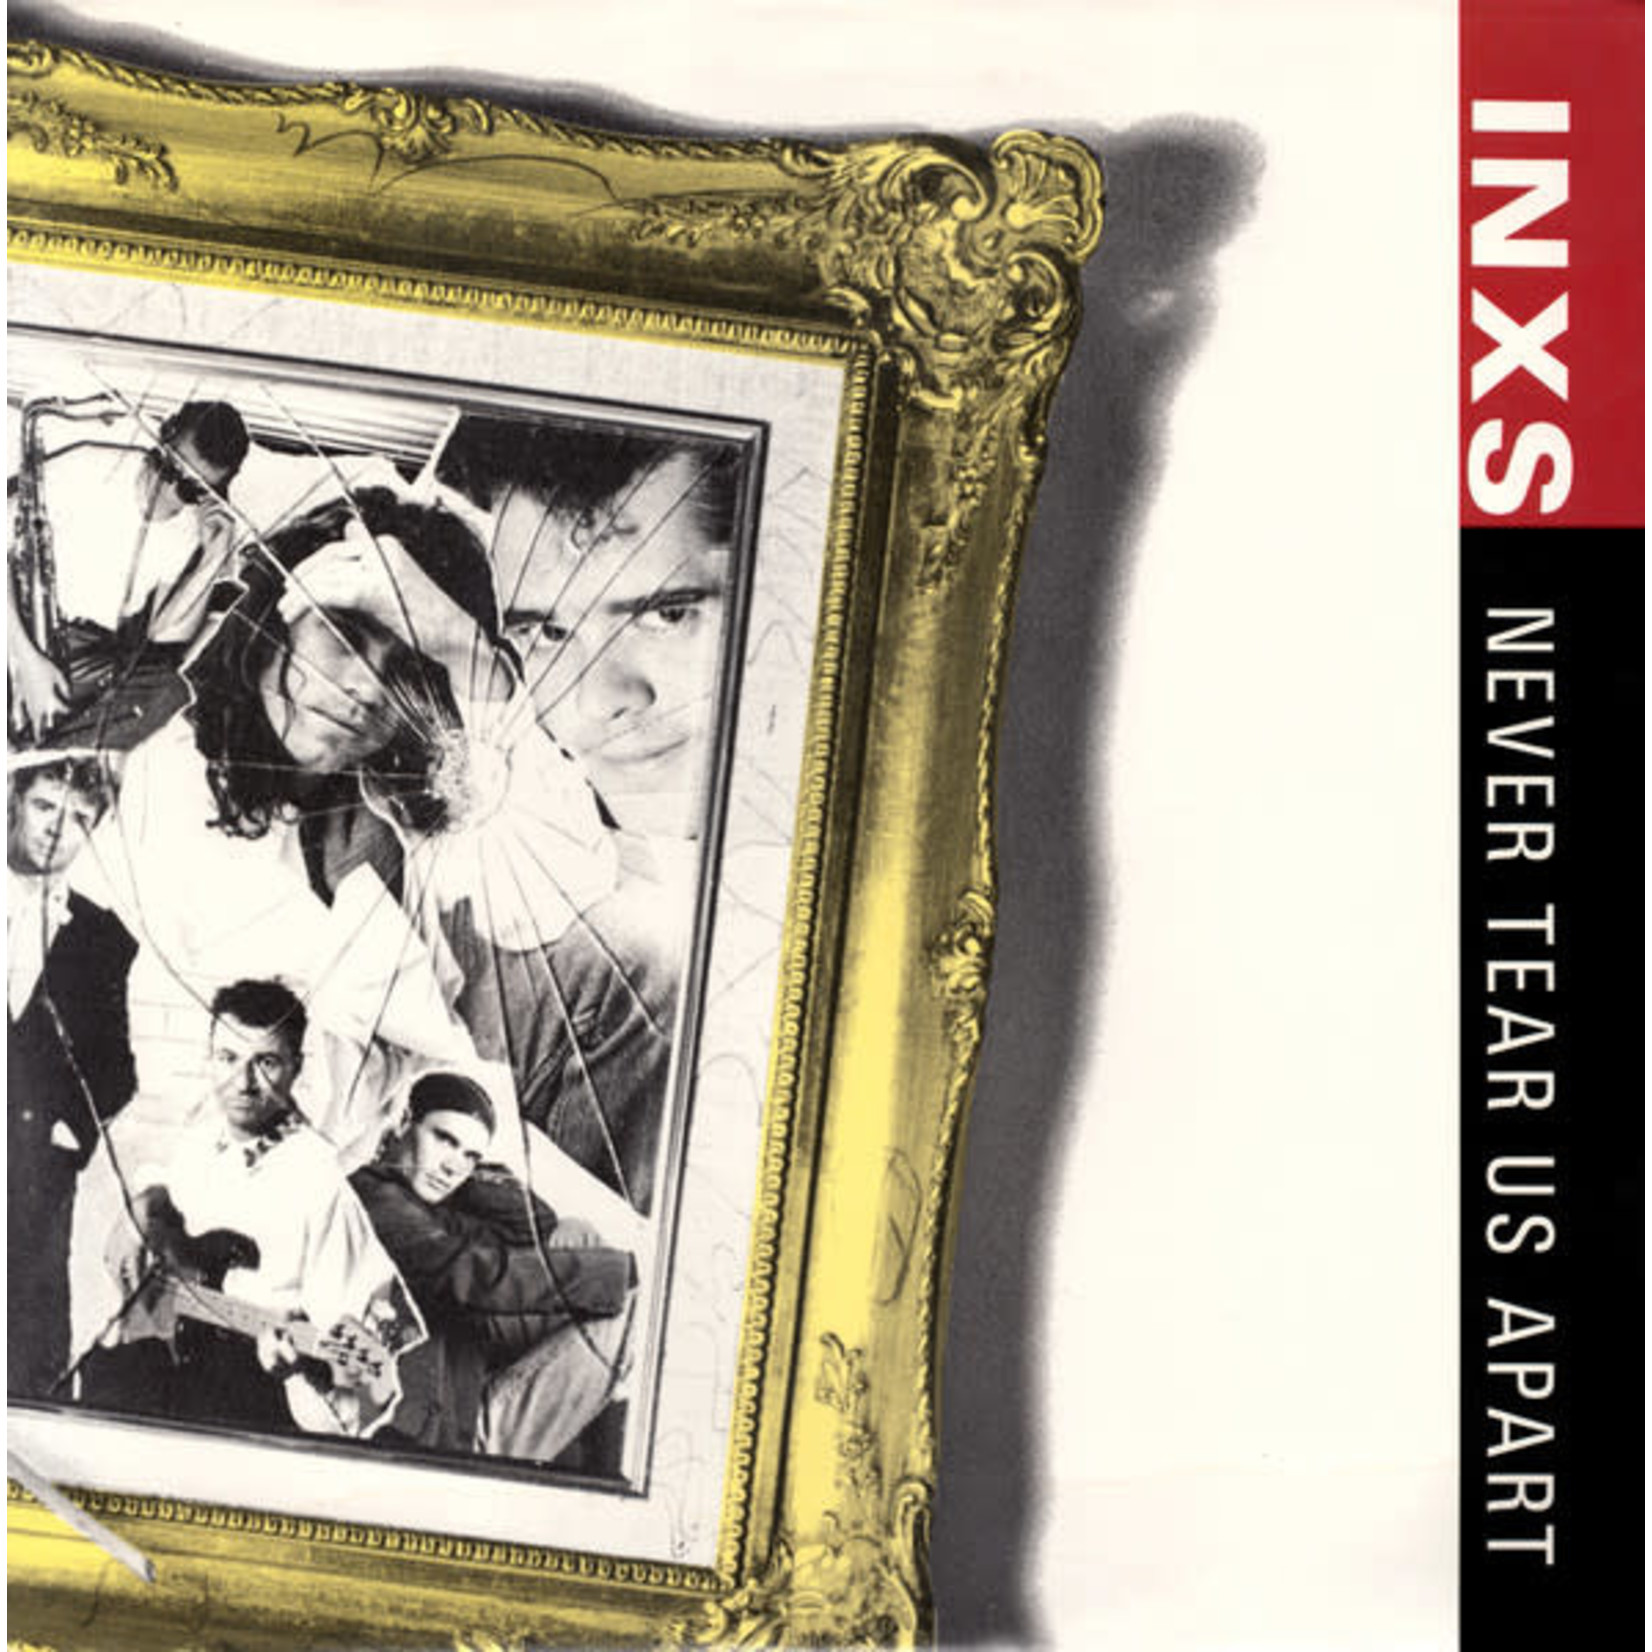 [Vintage] INXS - Never Tear Us Apart (12")